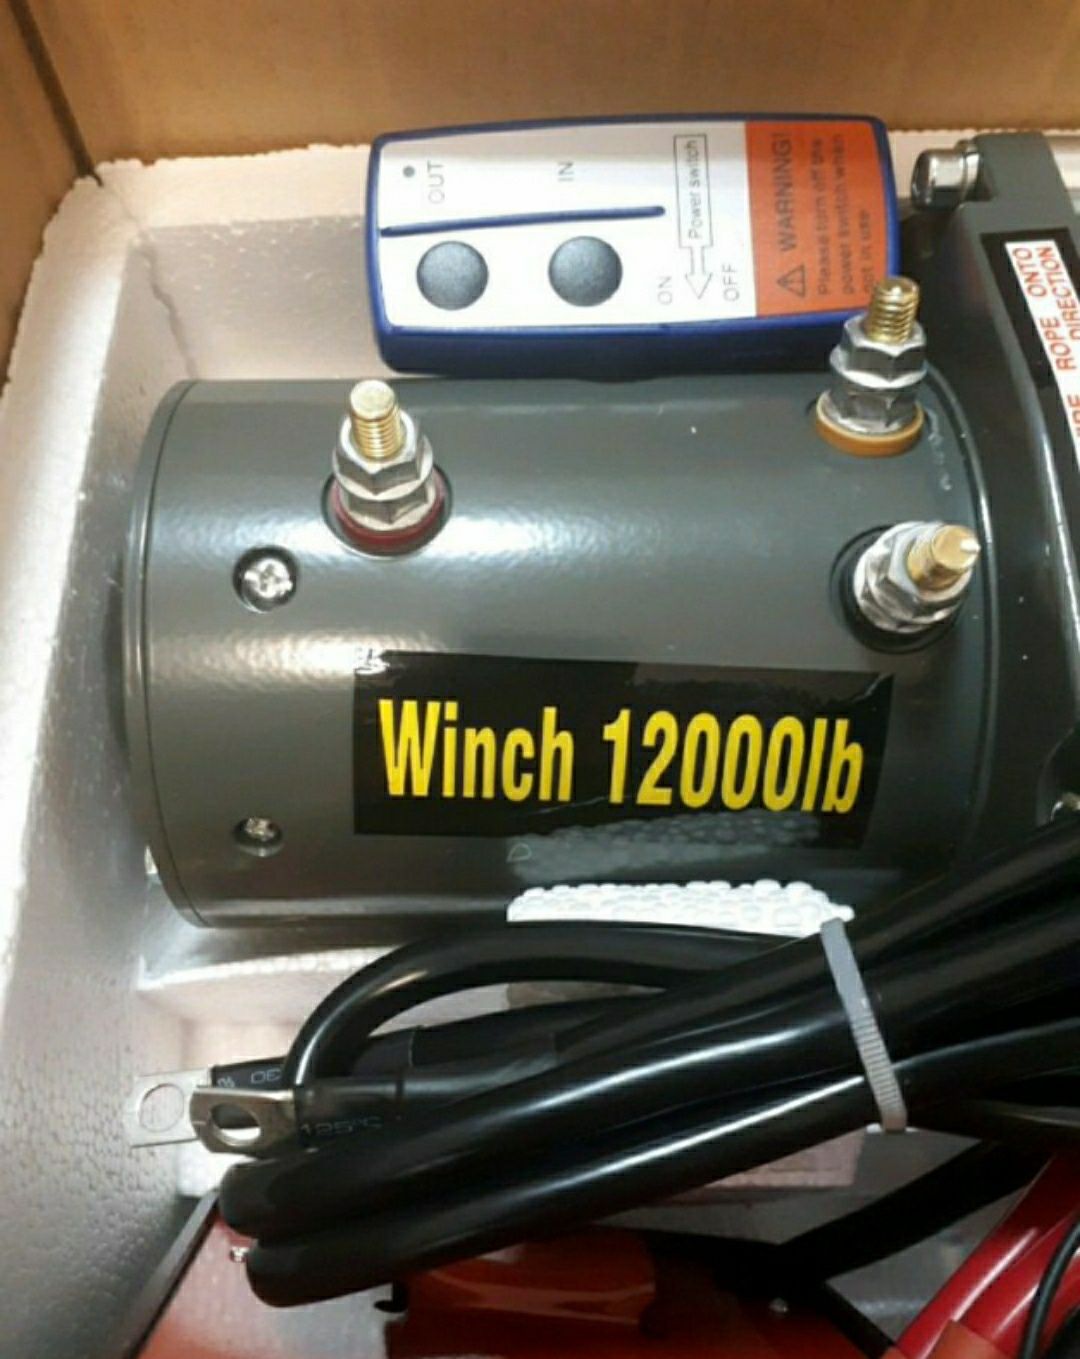 Бюджетная лебедка Winch 12000lbs (5500 кг)